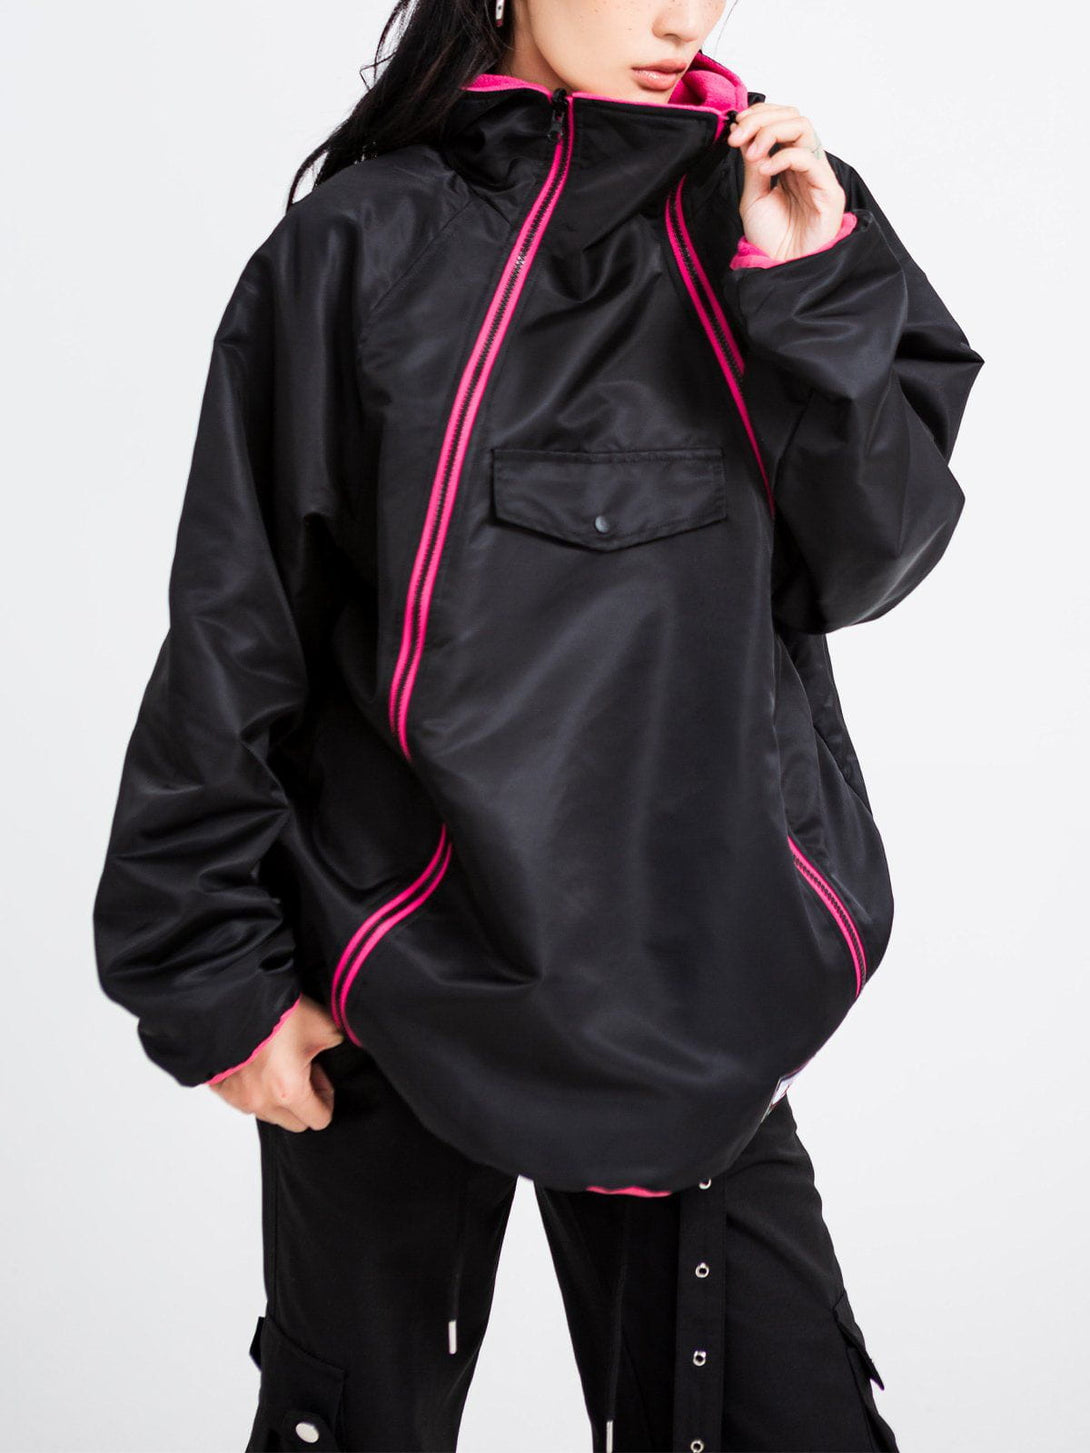 Majesda® - Patchwork Reversible Jacket outfit ideas, streetwear fashion - majesda.com